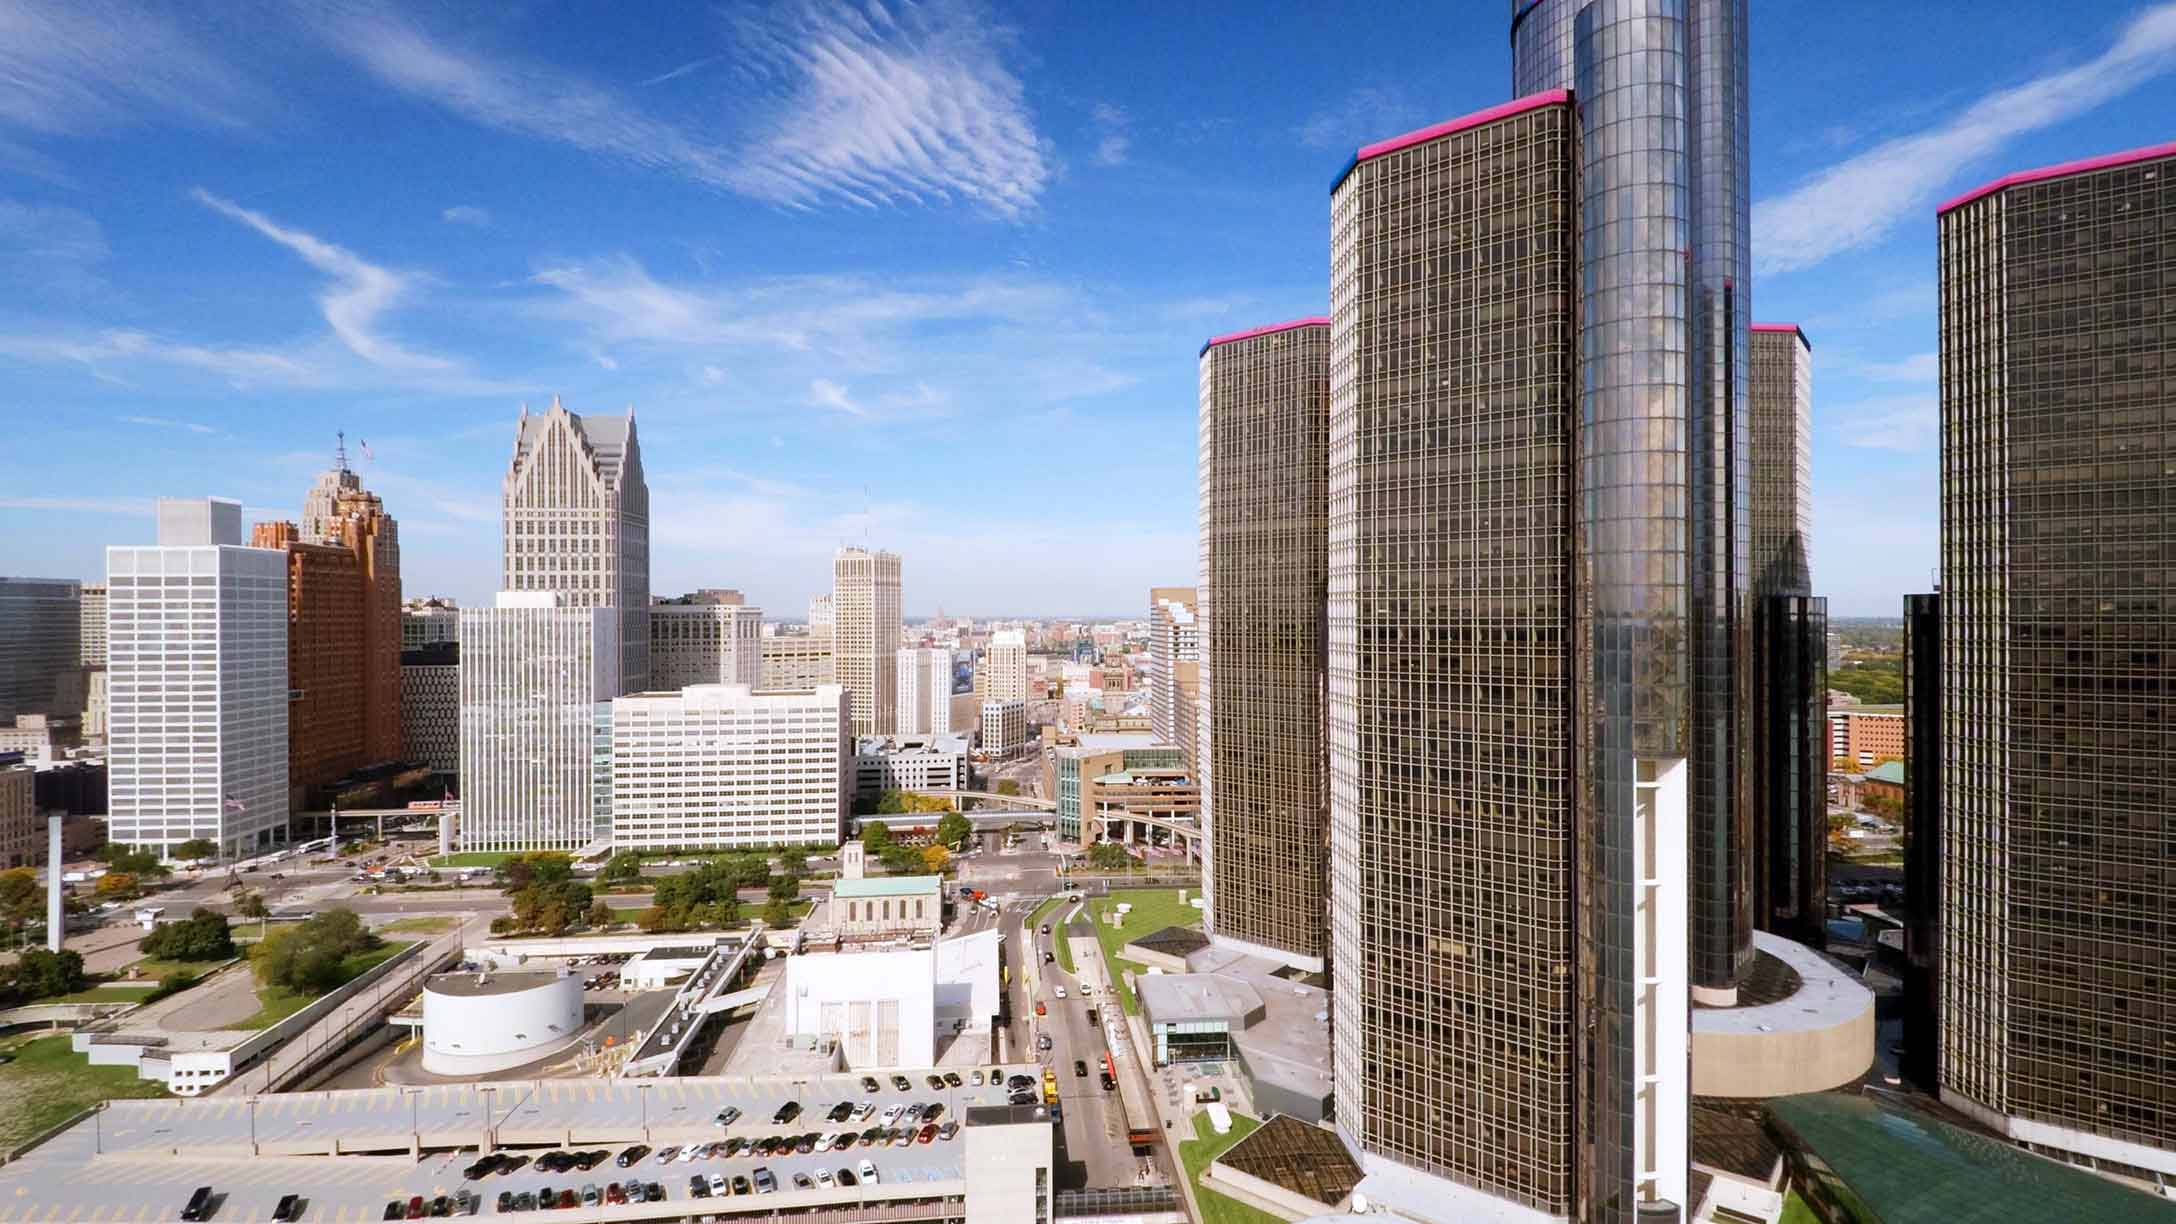 Photo of skyscrapers in Detroit